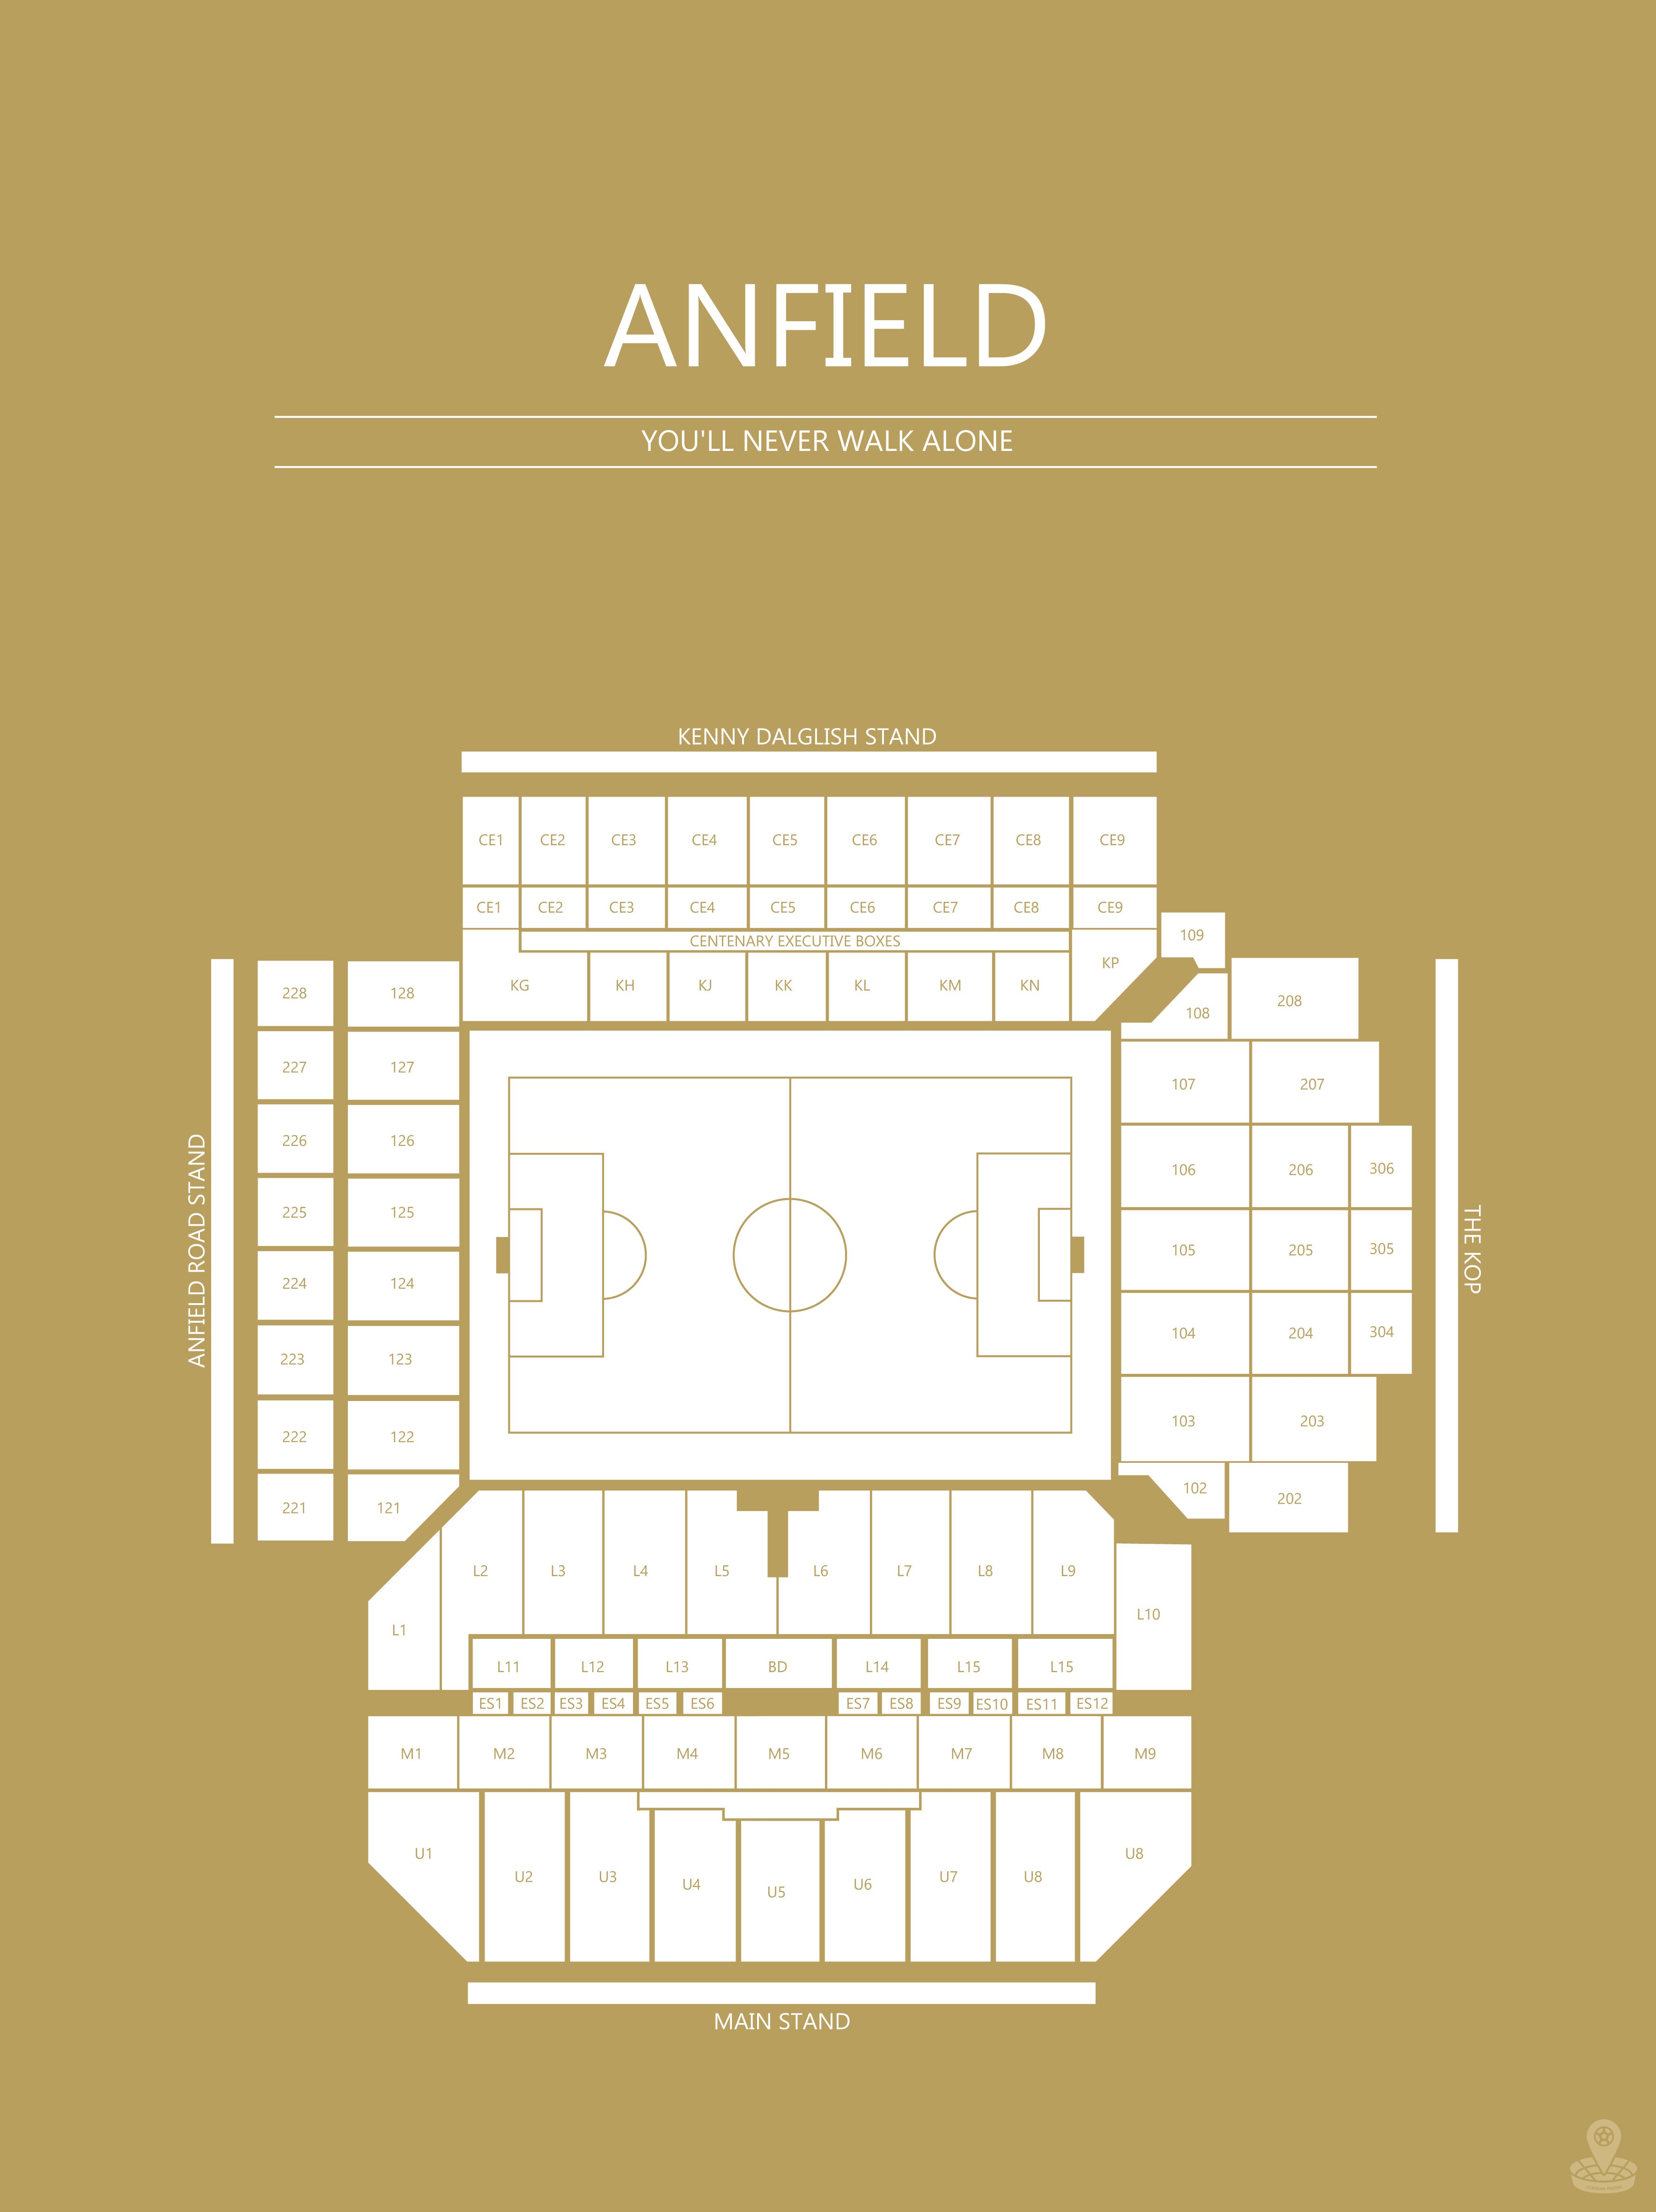 Fodbold plakat Liverpool Anfield stadium i karry